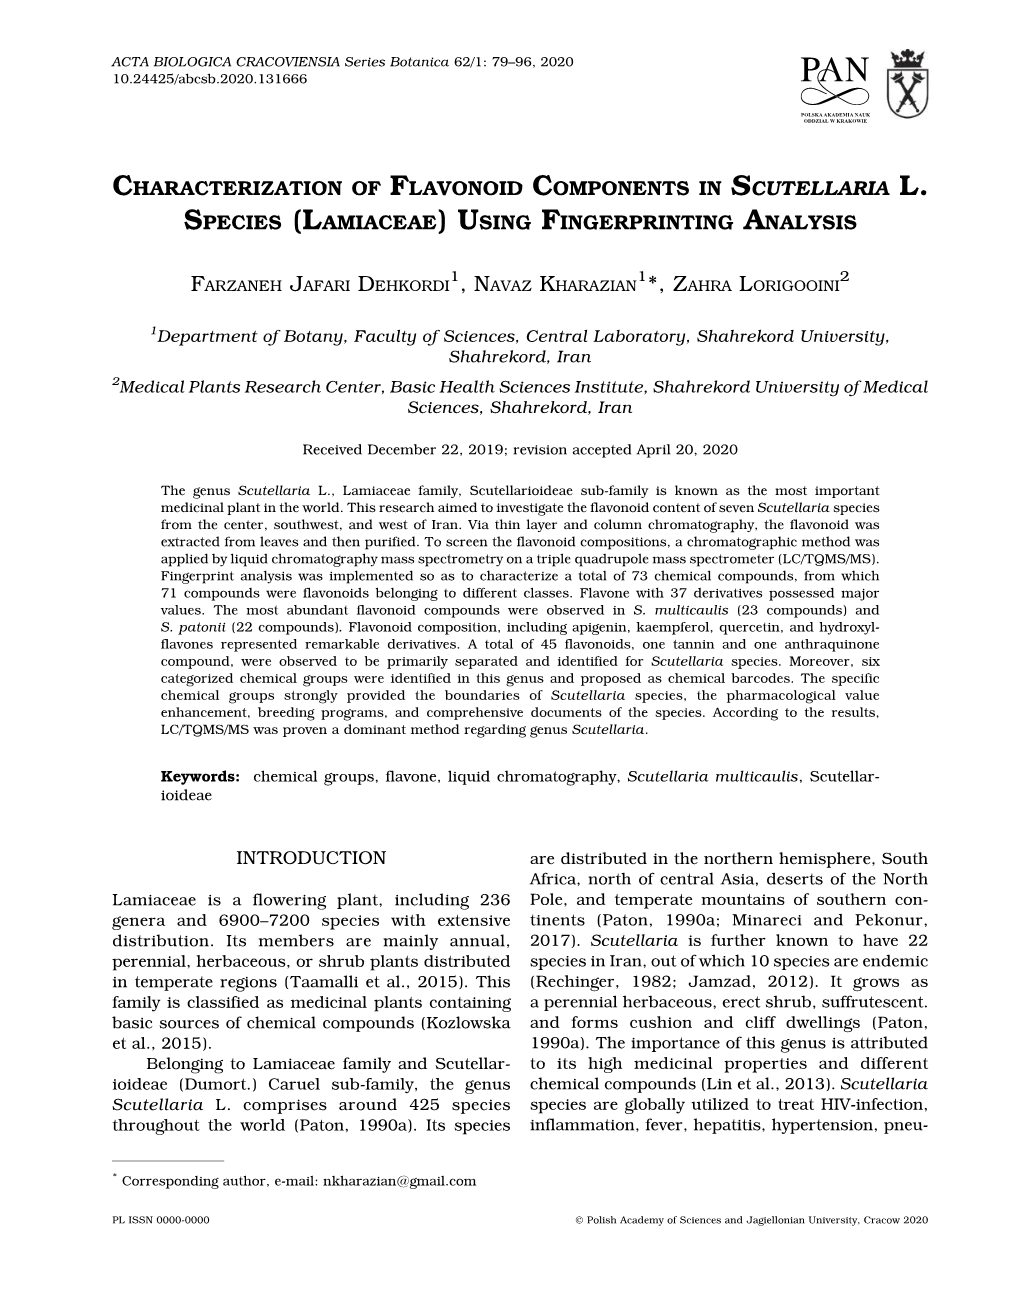 Characterization of Flavonoid Components in Scutellaria L